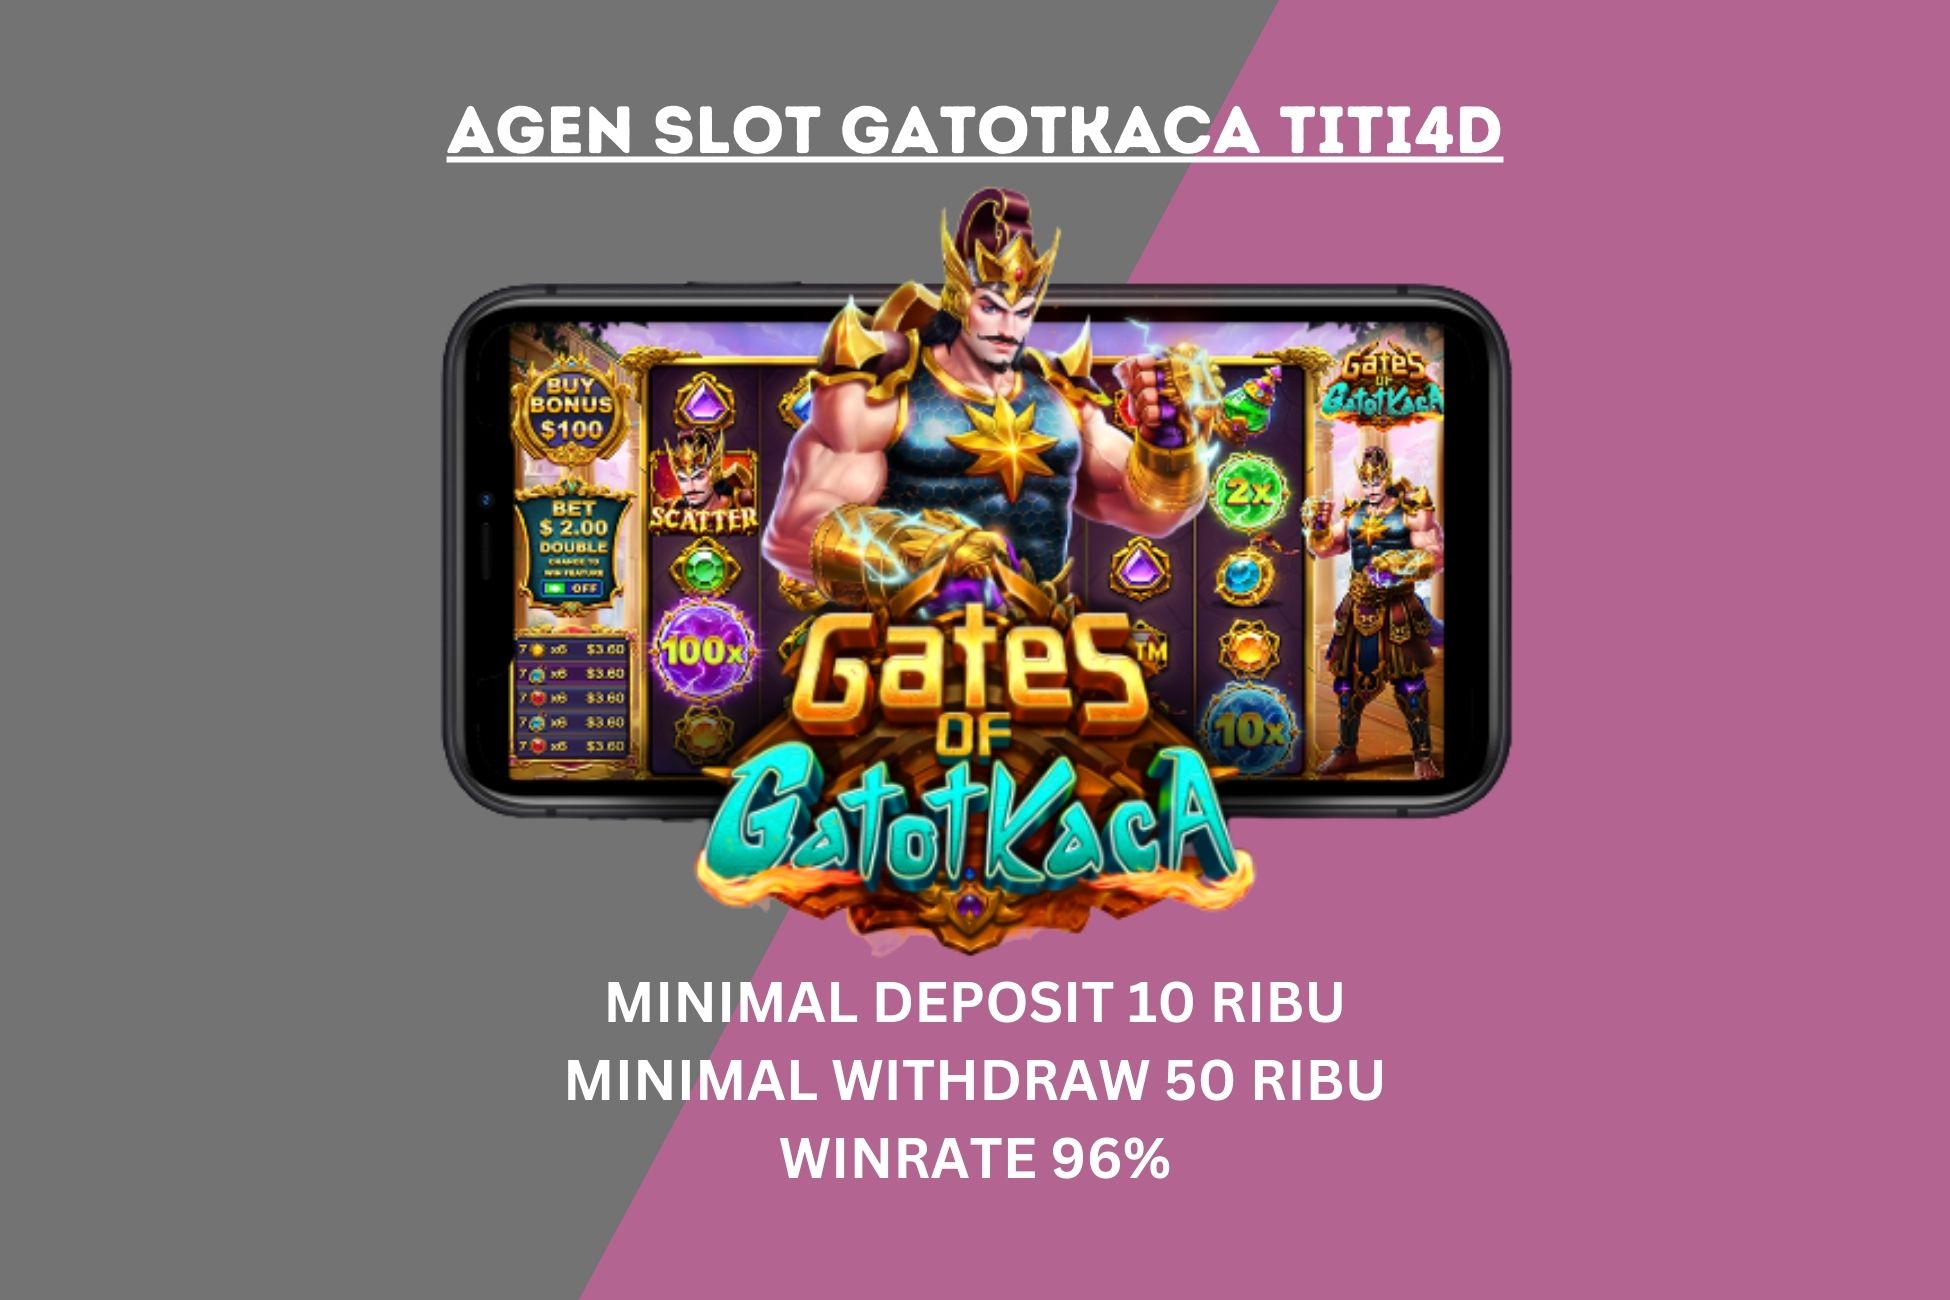 Agen Slot Gatotkaca Titi4D